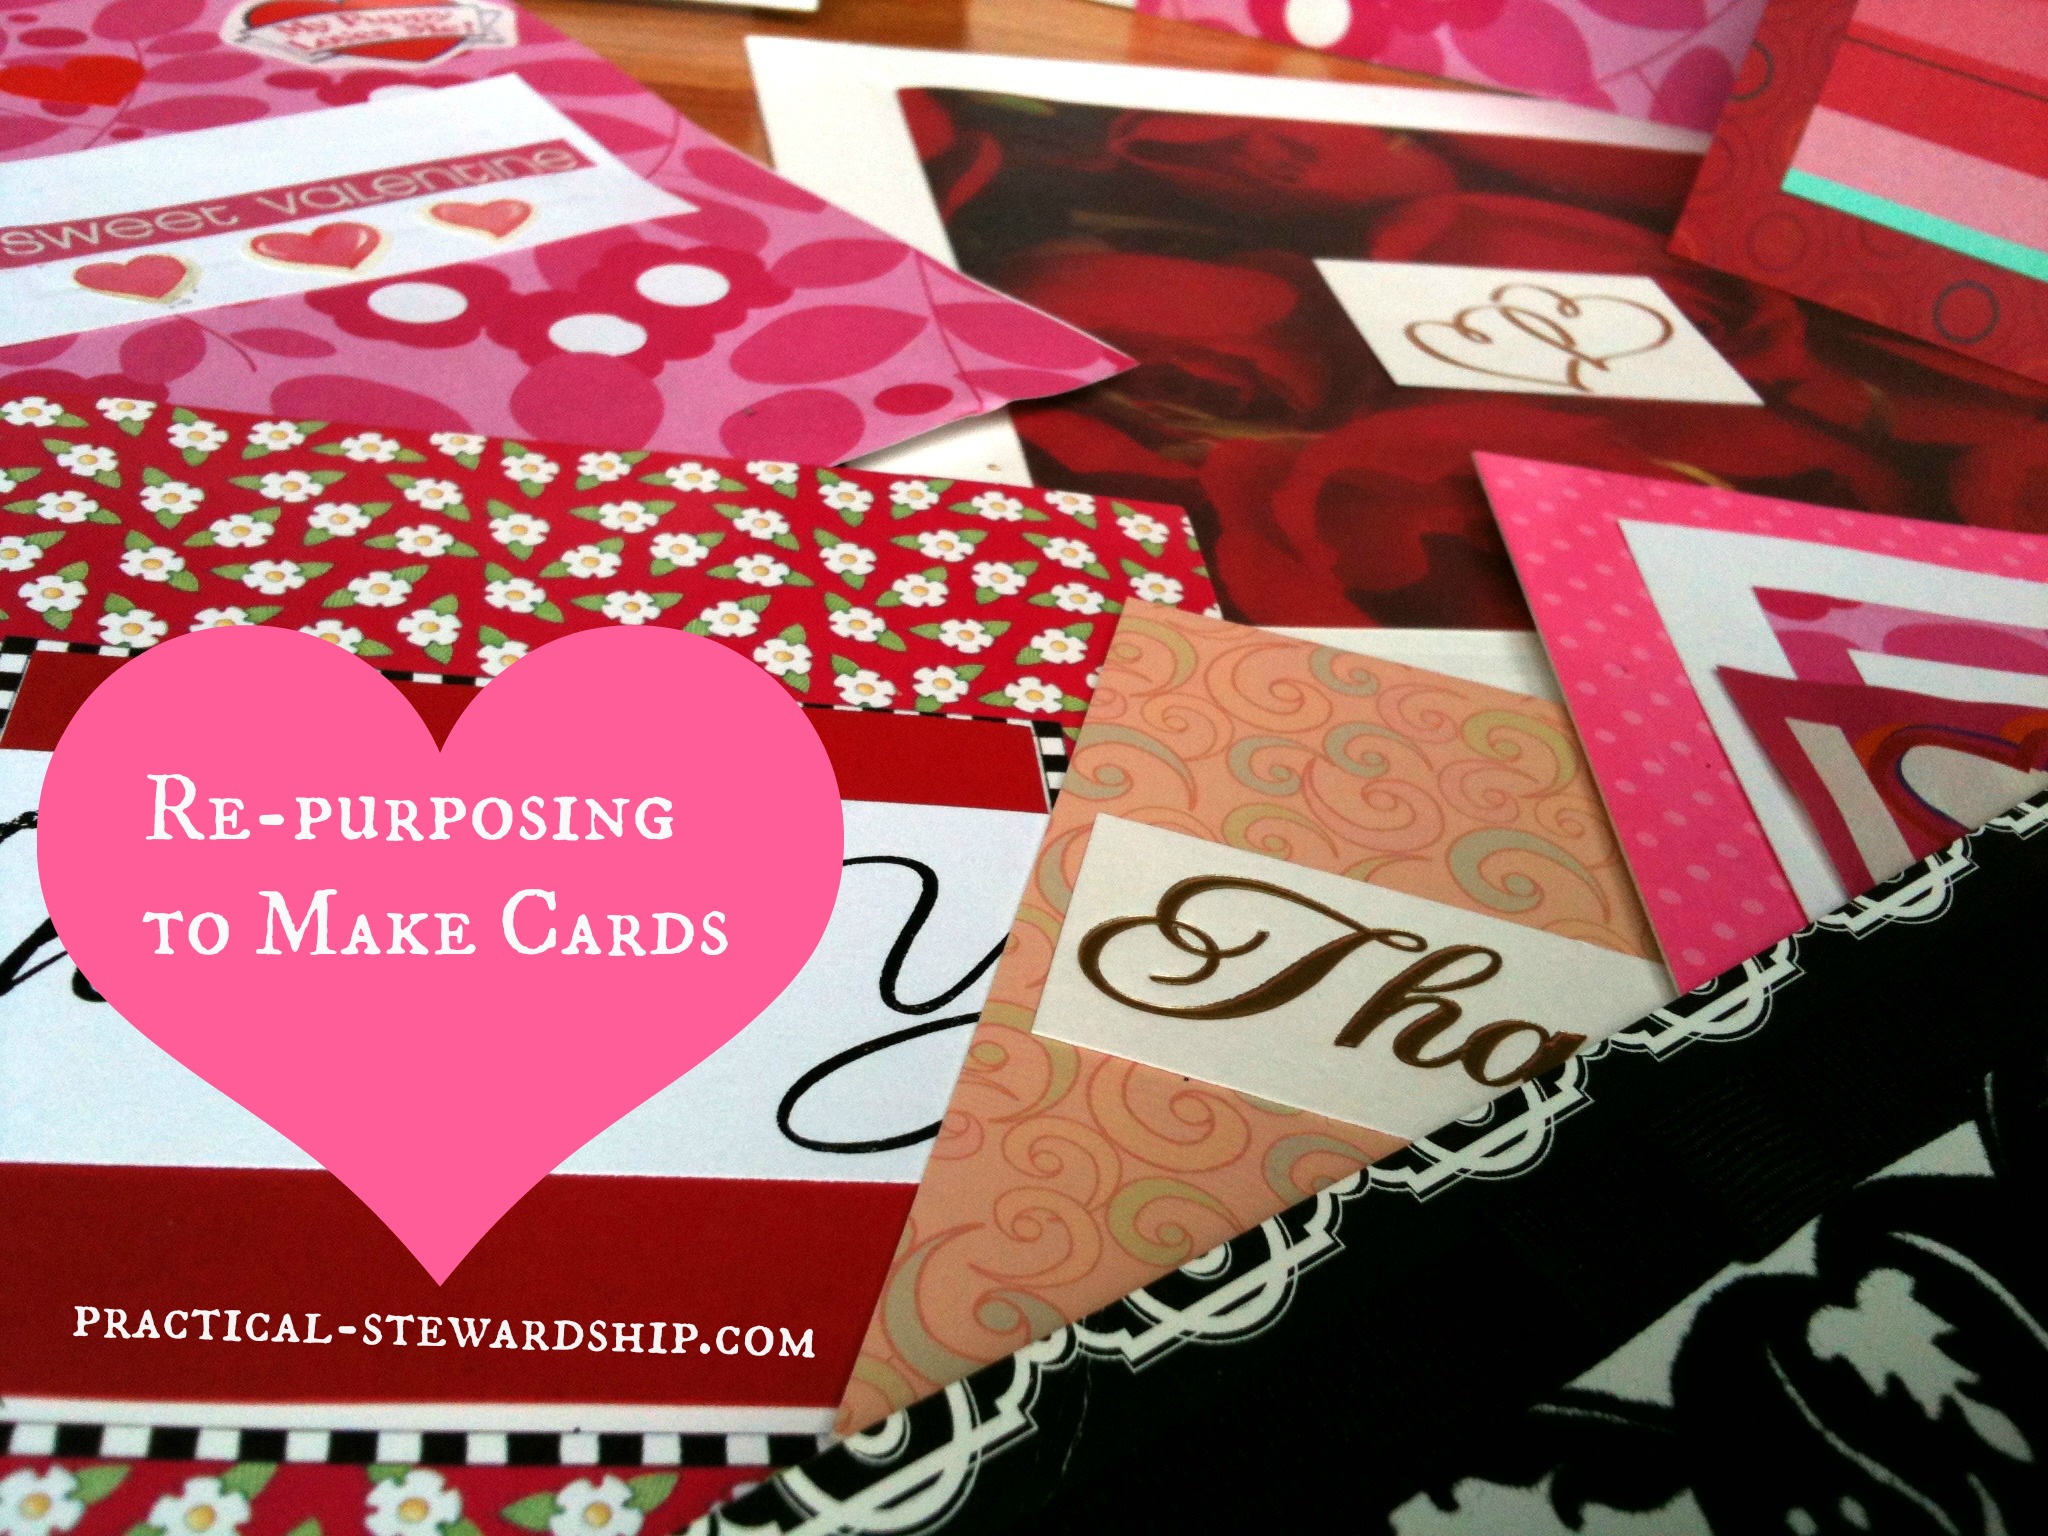 Re-purposing to Make Cards @ practical-stewardship.com